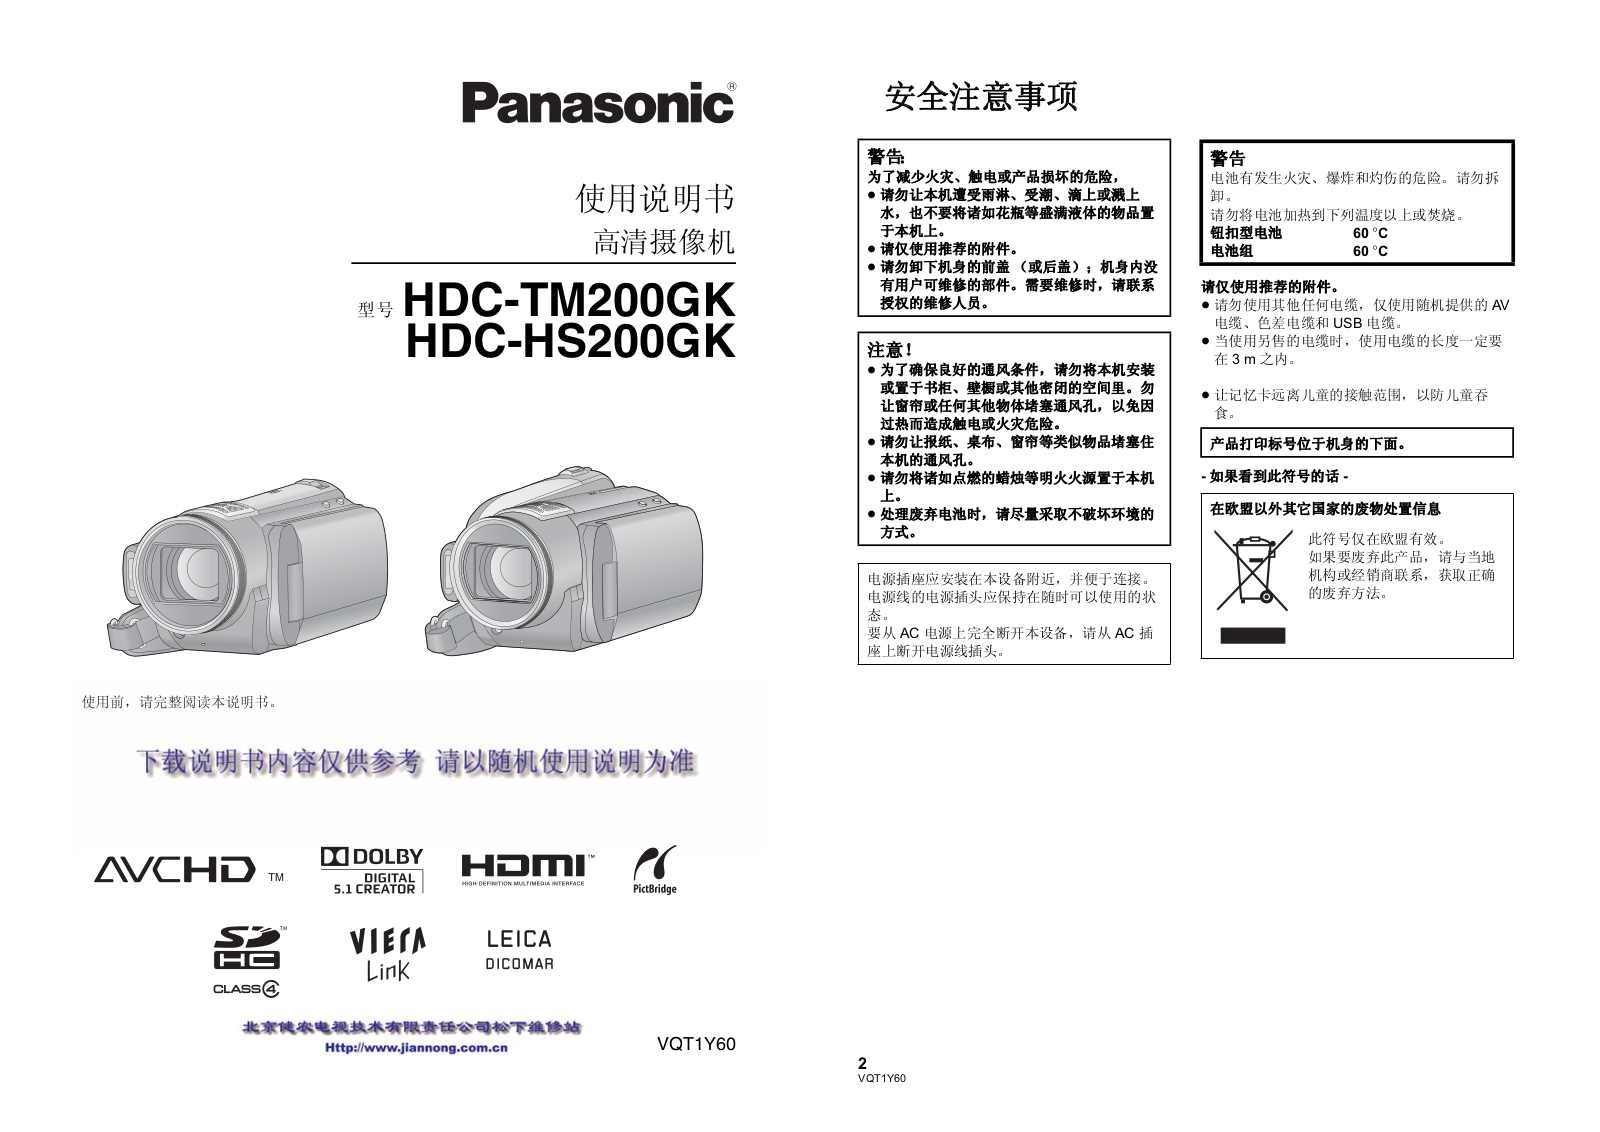 Panasonic HDC-HS200GK, HDC-TM200GK User Manual